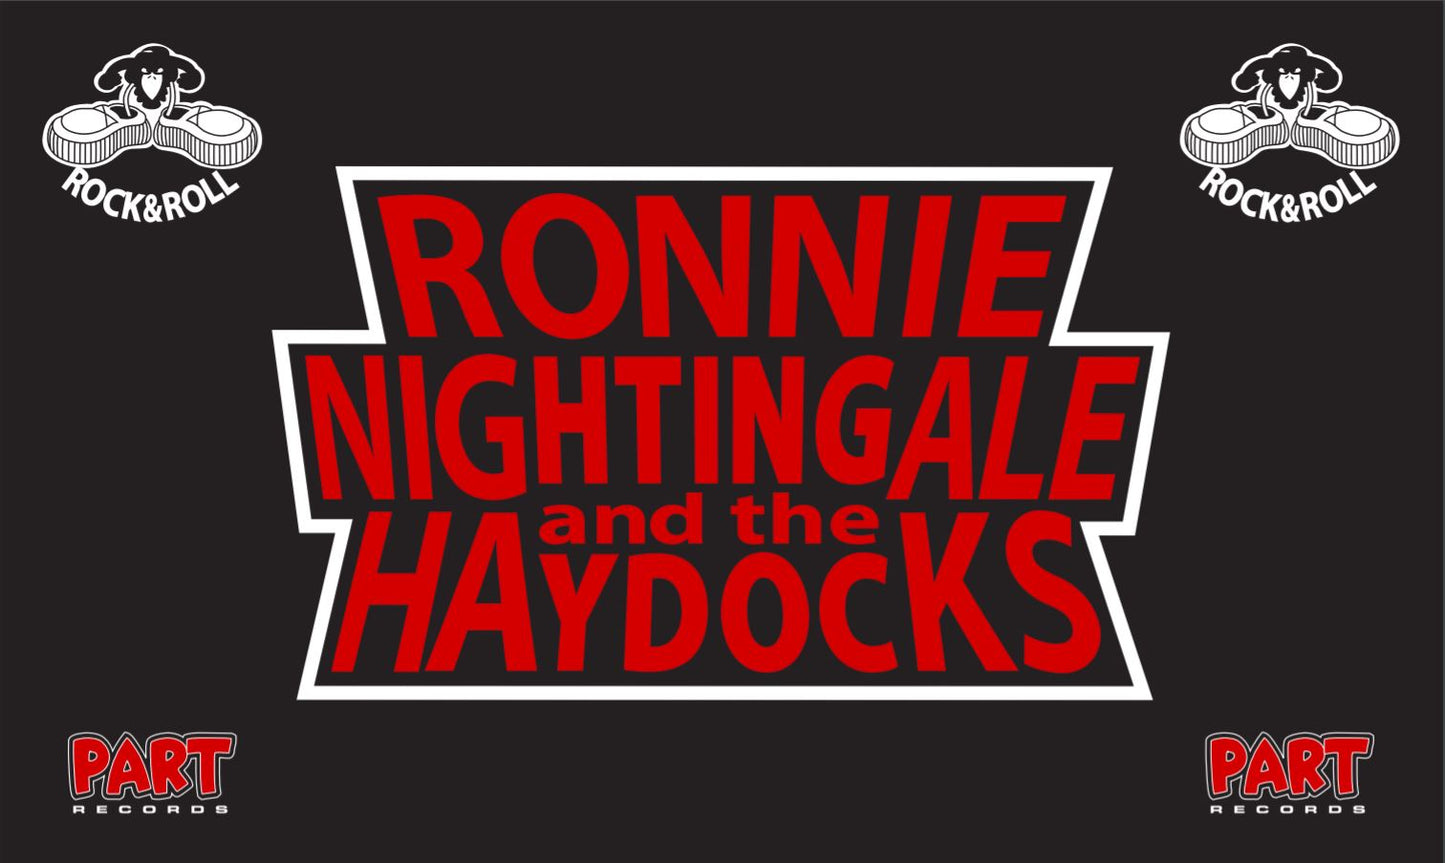 Guest Towel - Ronnie Nightingale & The Haydocks